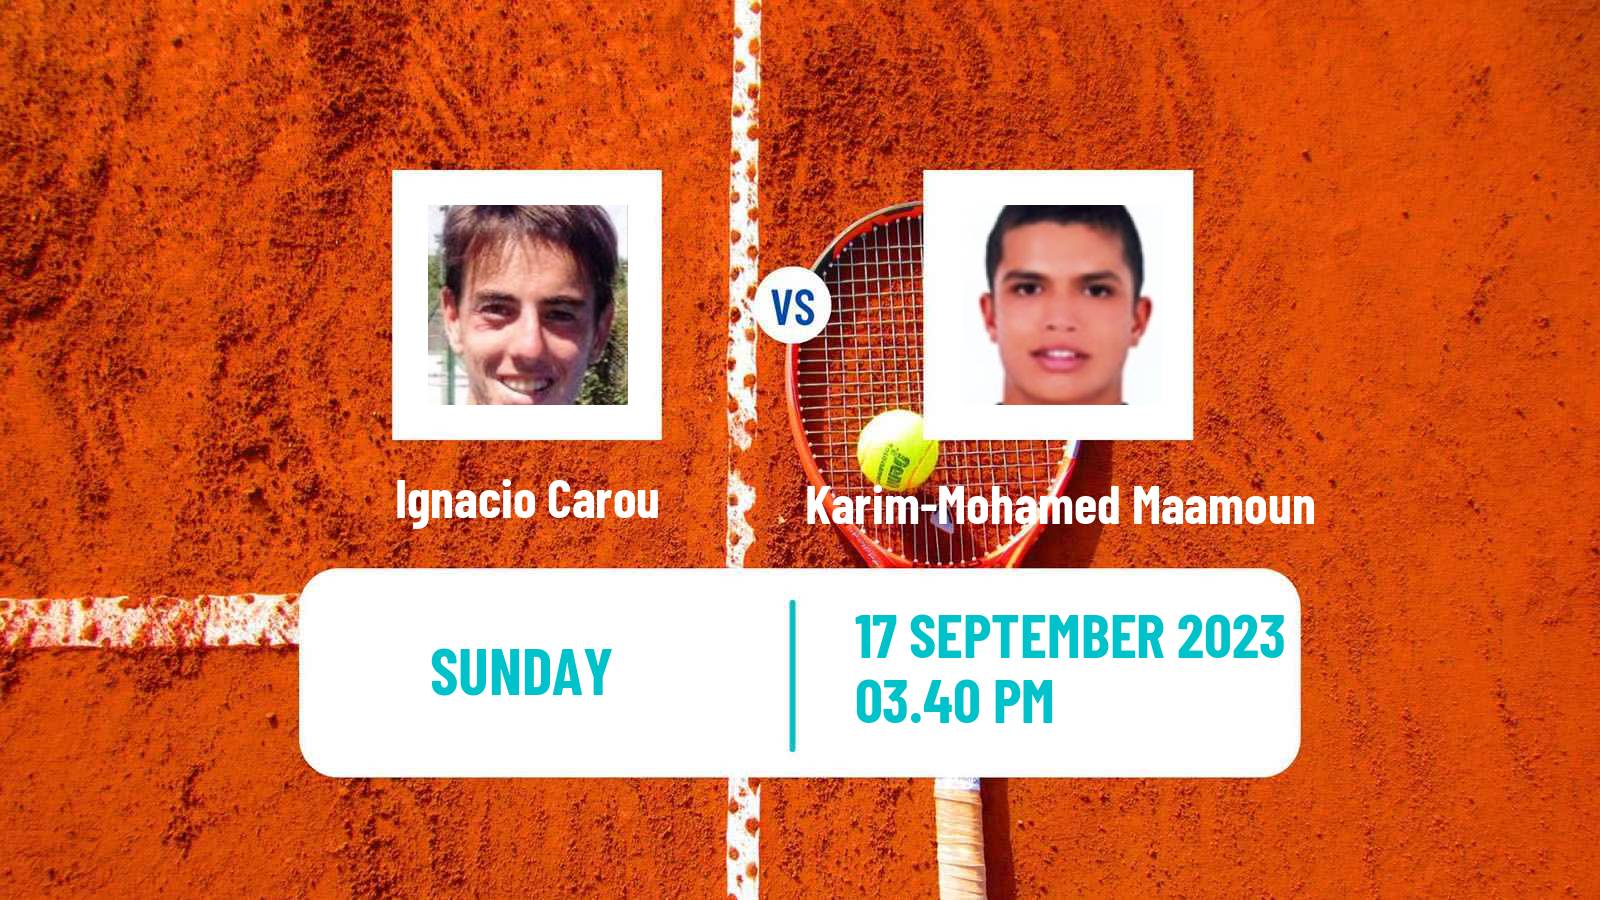 Tennis Davis Cup World Group II Ignacio Carou - Karim-Mohamed Maamoun